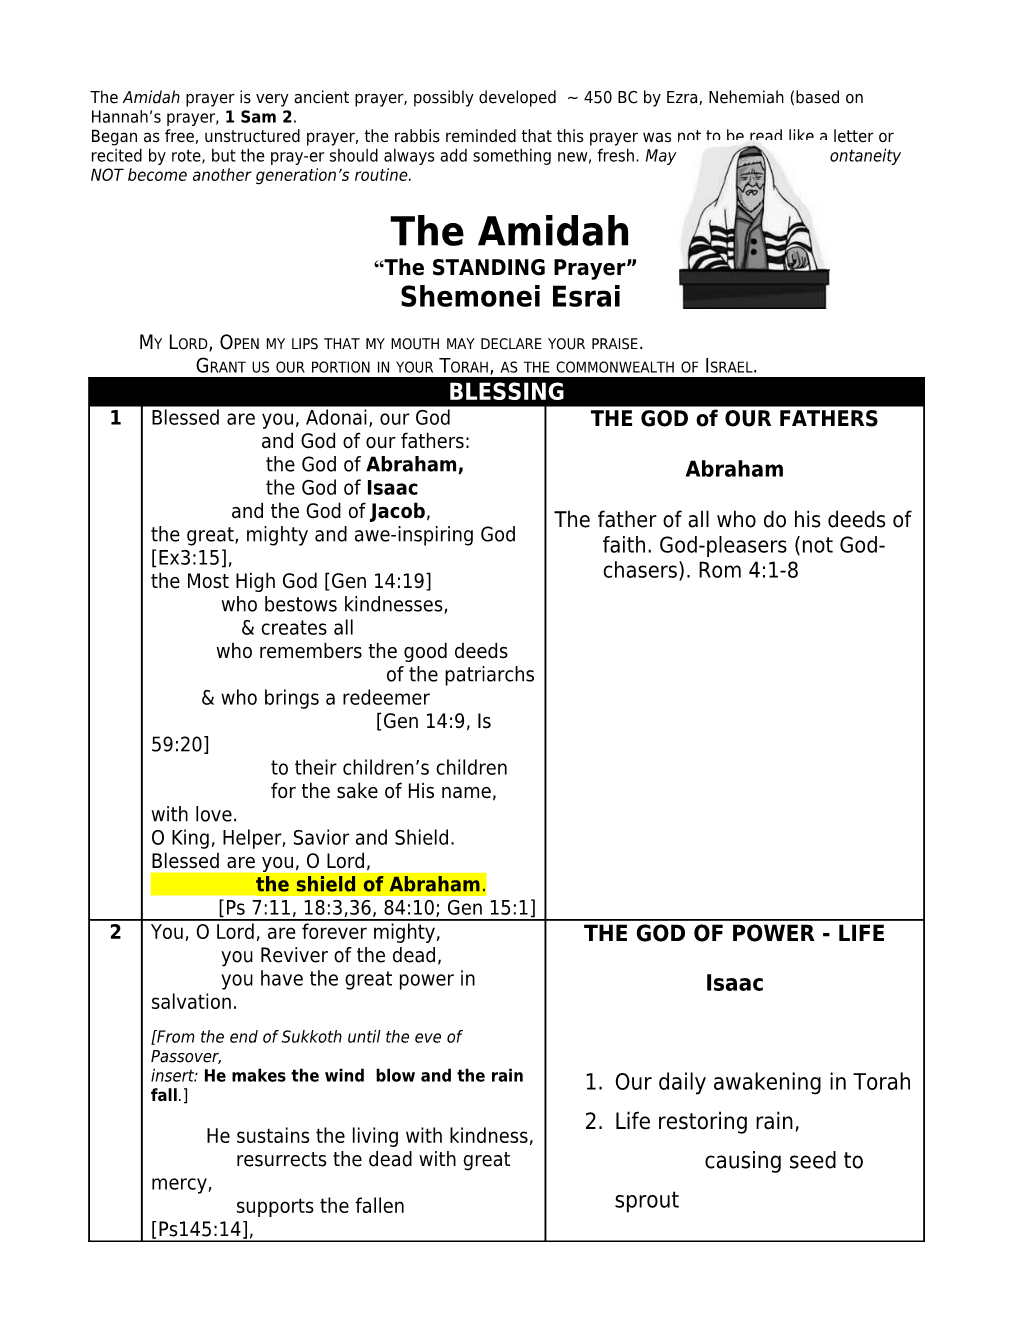 The Amidah Prayer